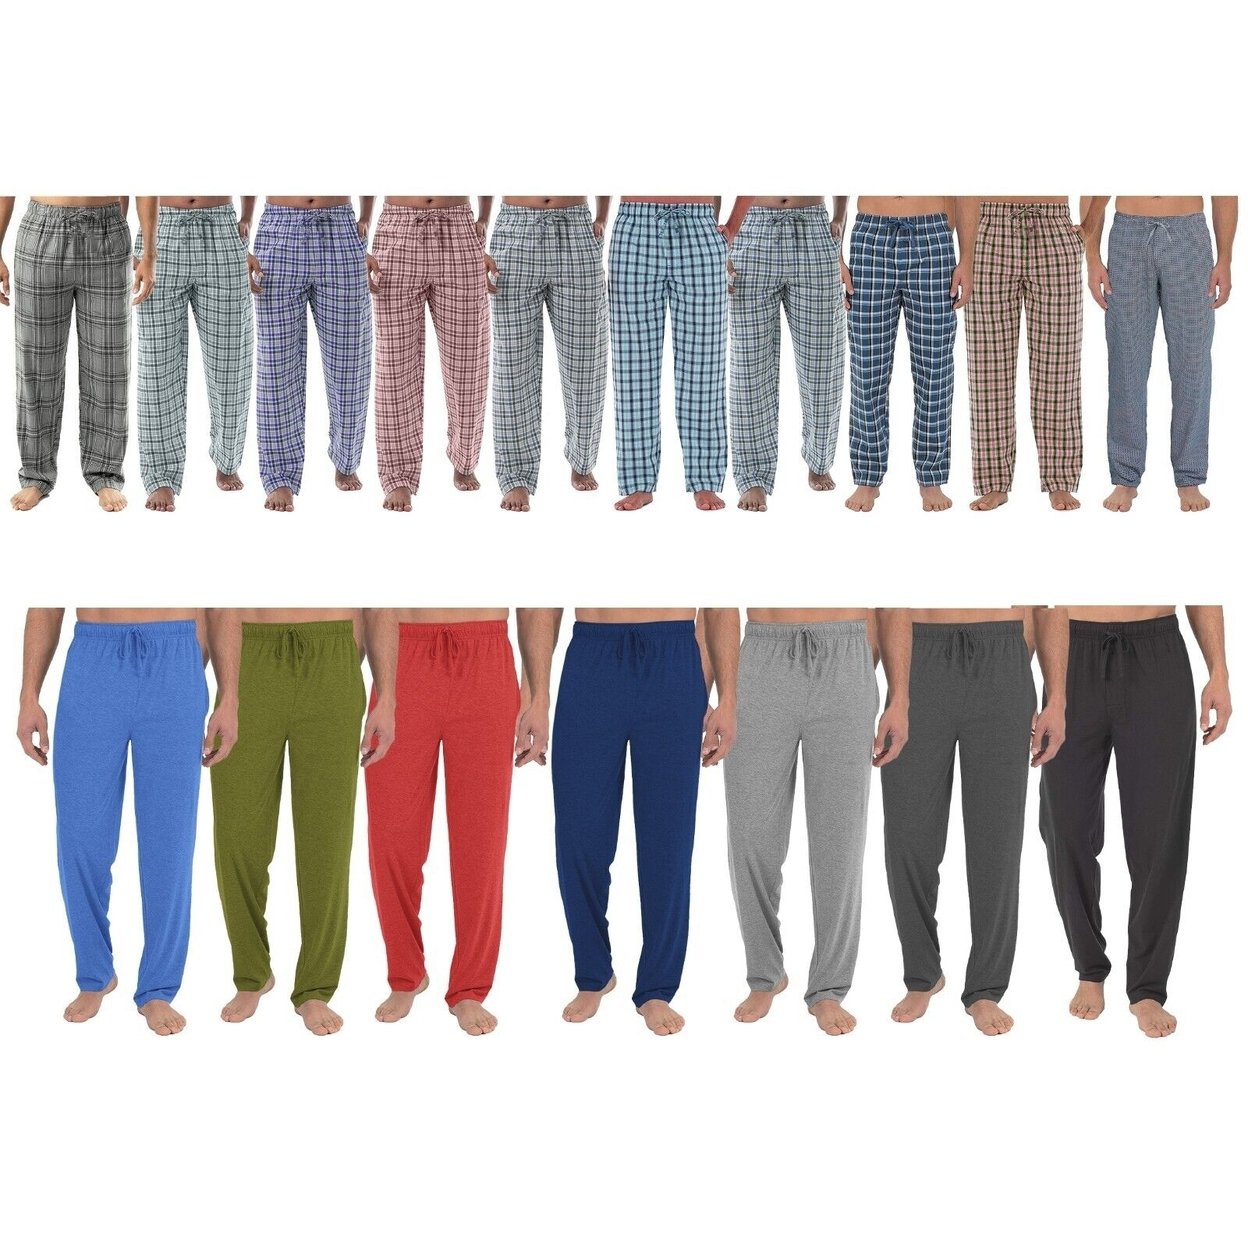 2-Pack: Men's Ultra-Soft Solid & Plaid Cotton Jersey Knit Comfy Sleep Lounge Pajama Pants - Plaid, X-large